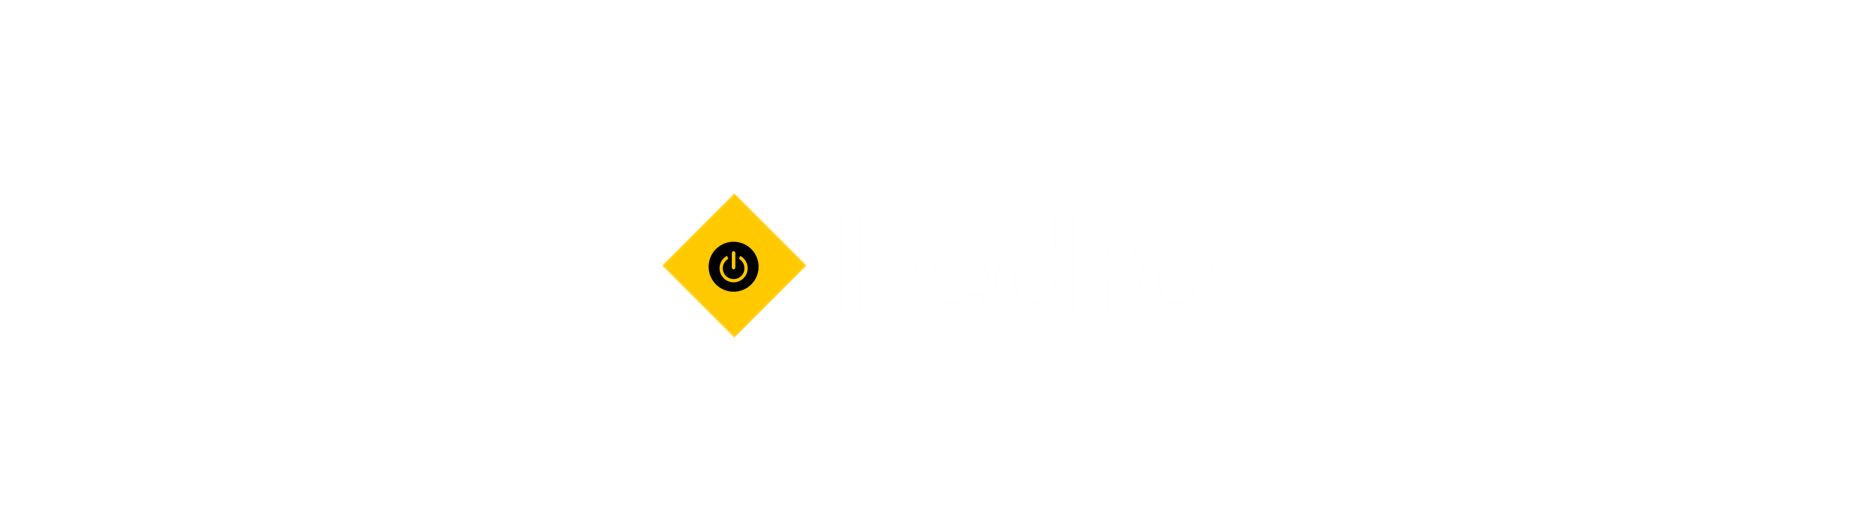 Kedro Boot Logo - Dark